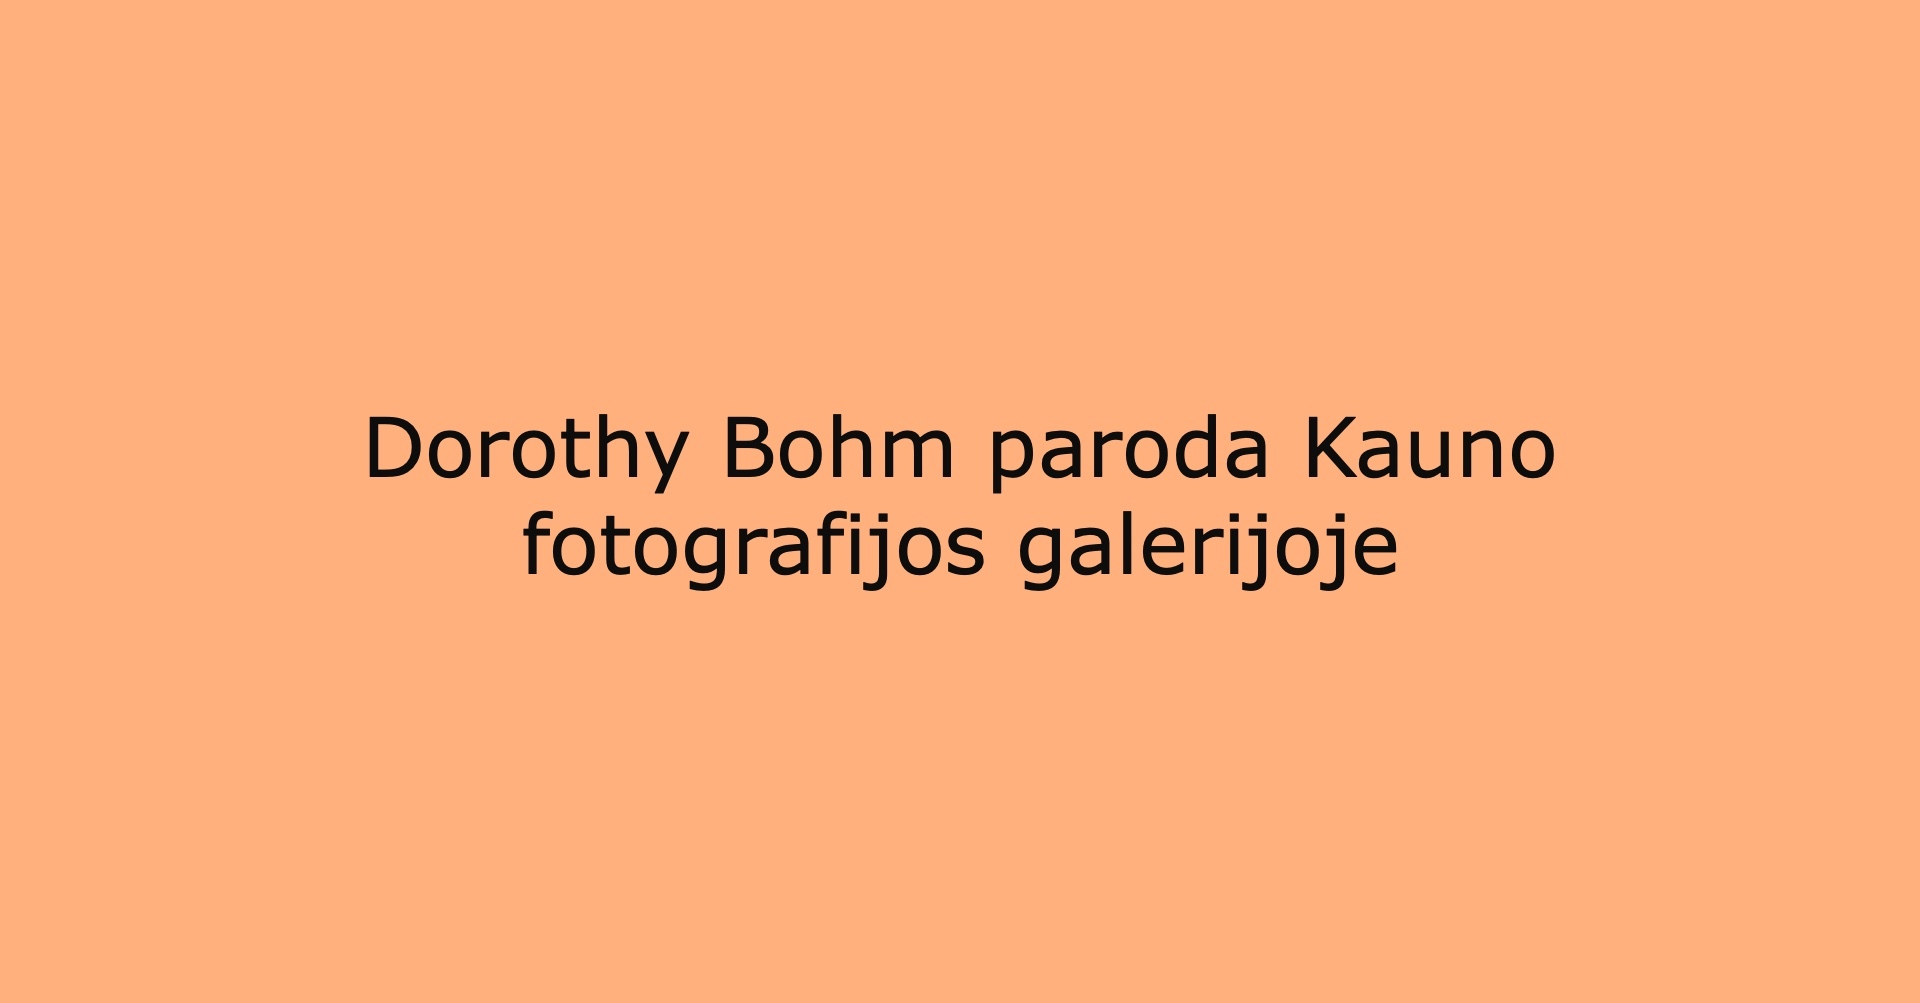 Dorothy Bohm paroda Kauno fotografijos galerijoje